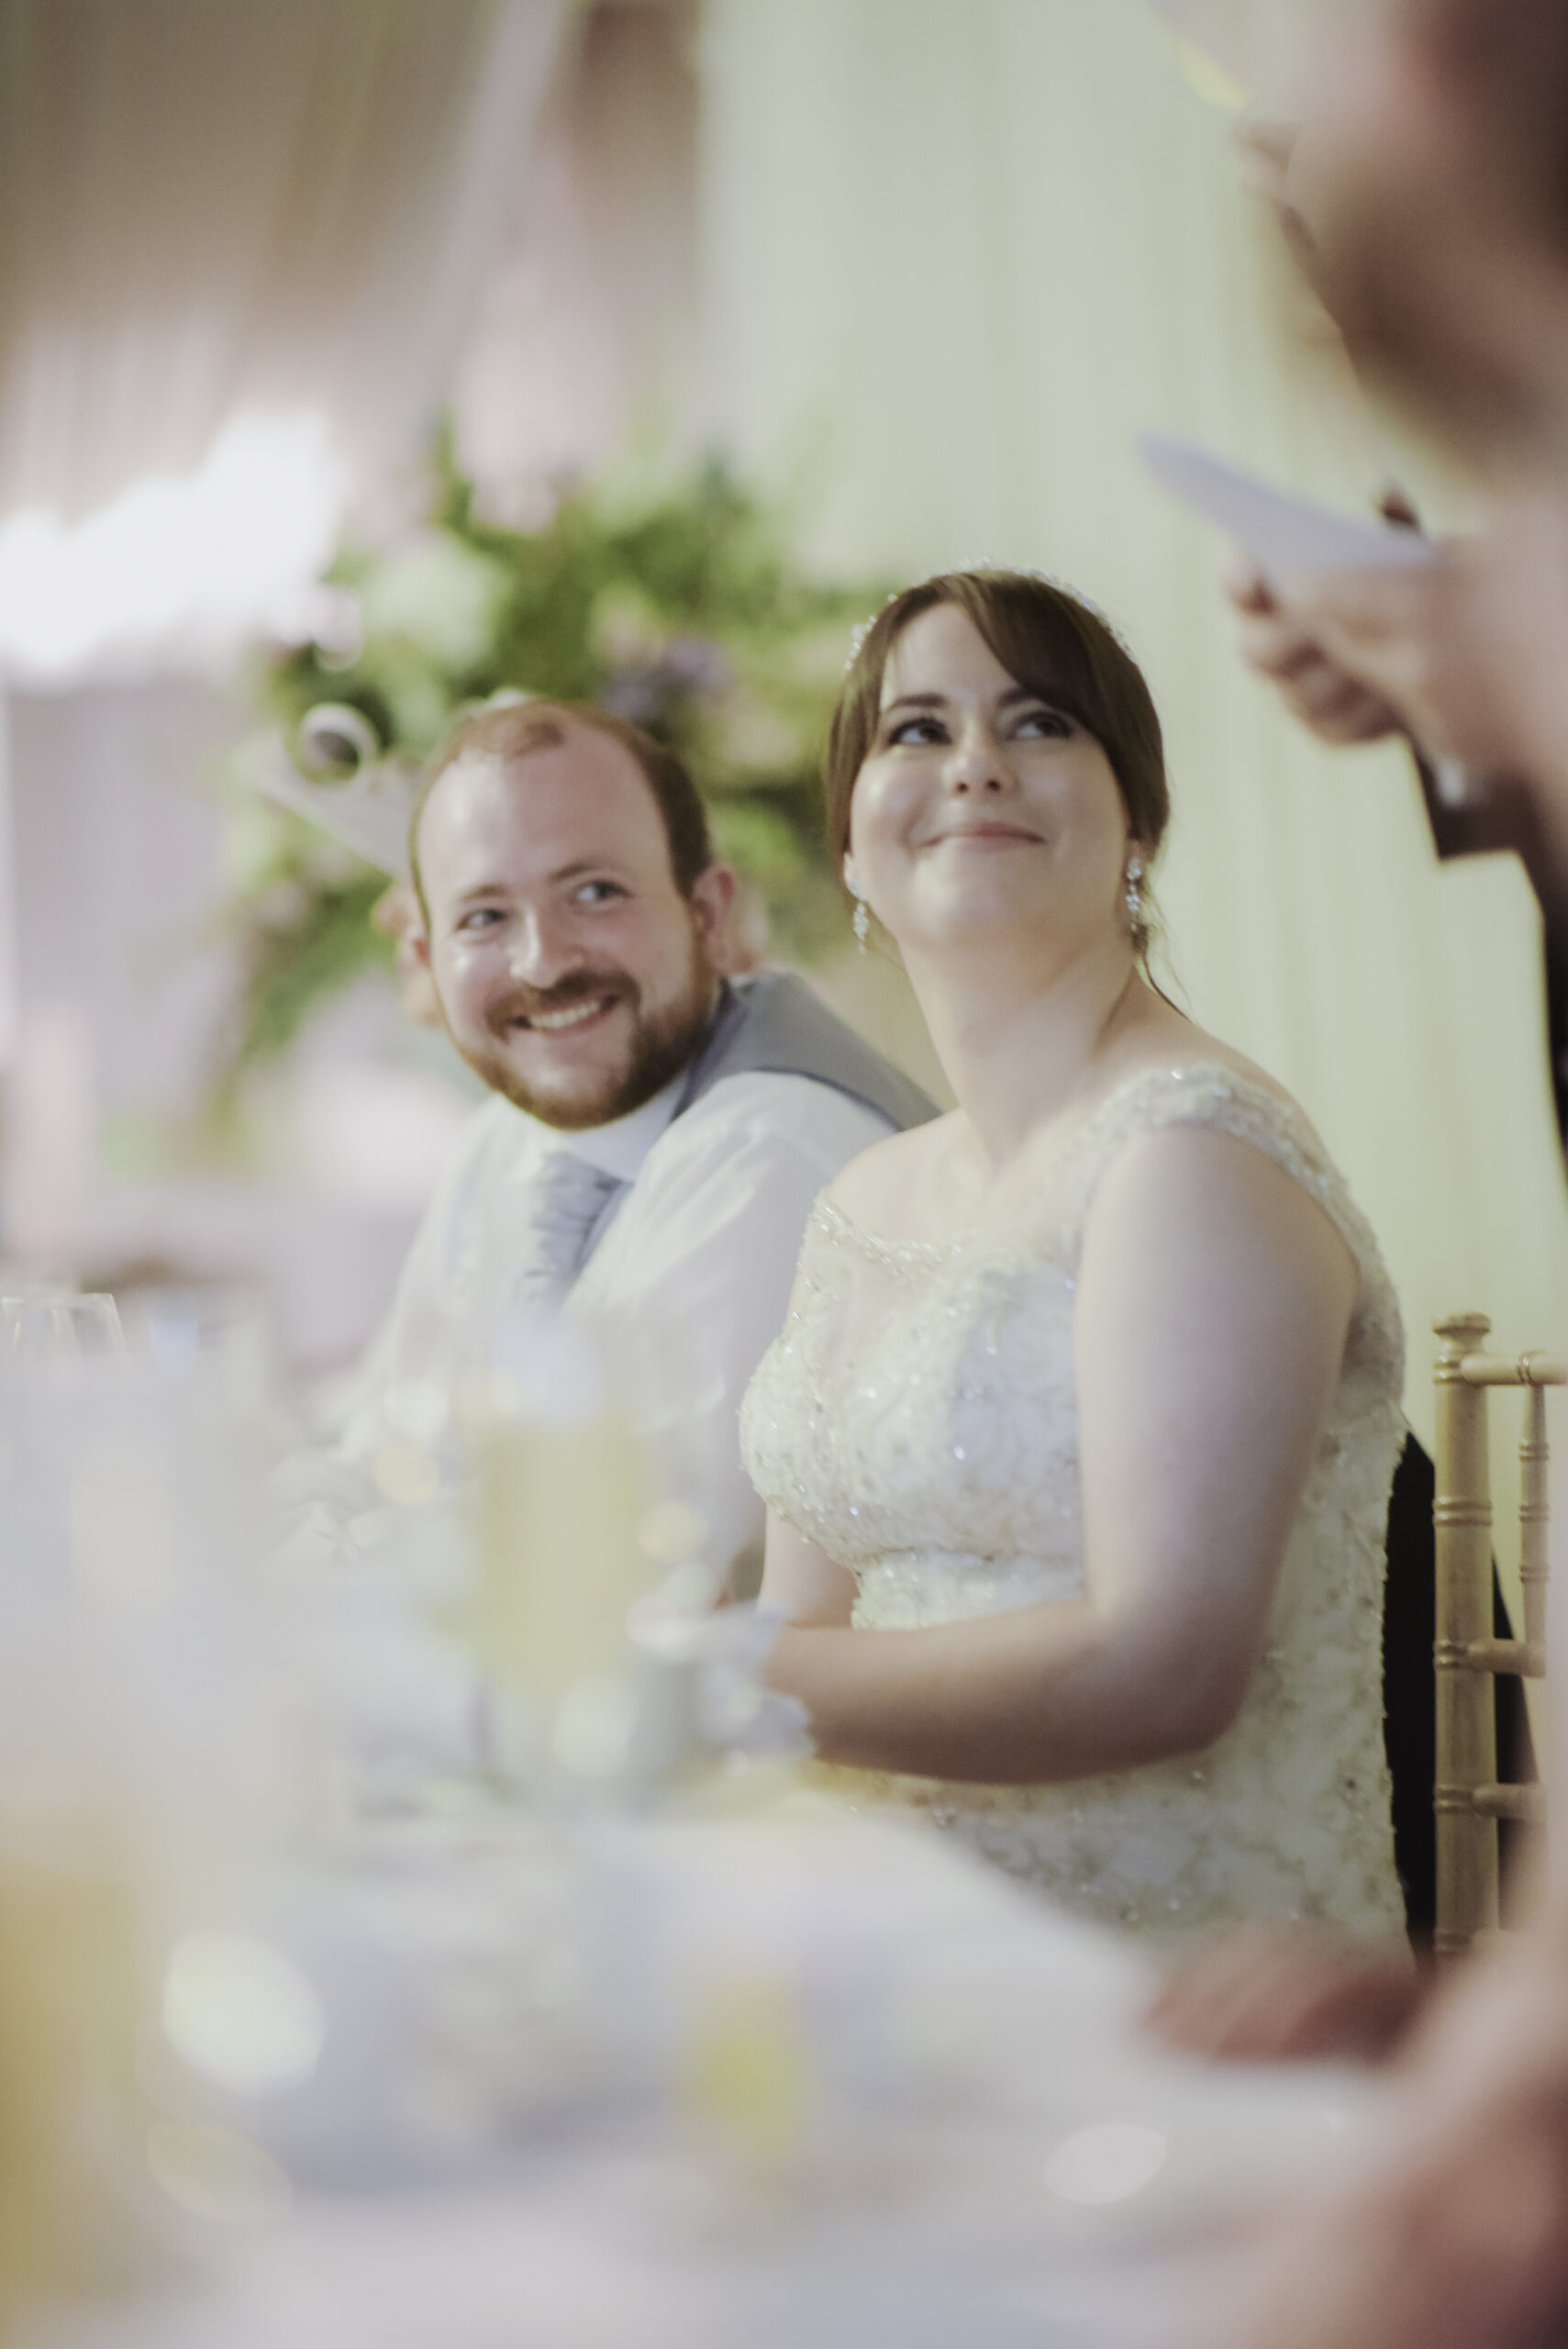 The Wedding Photo Company Images